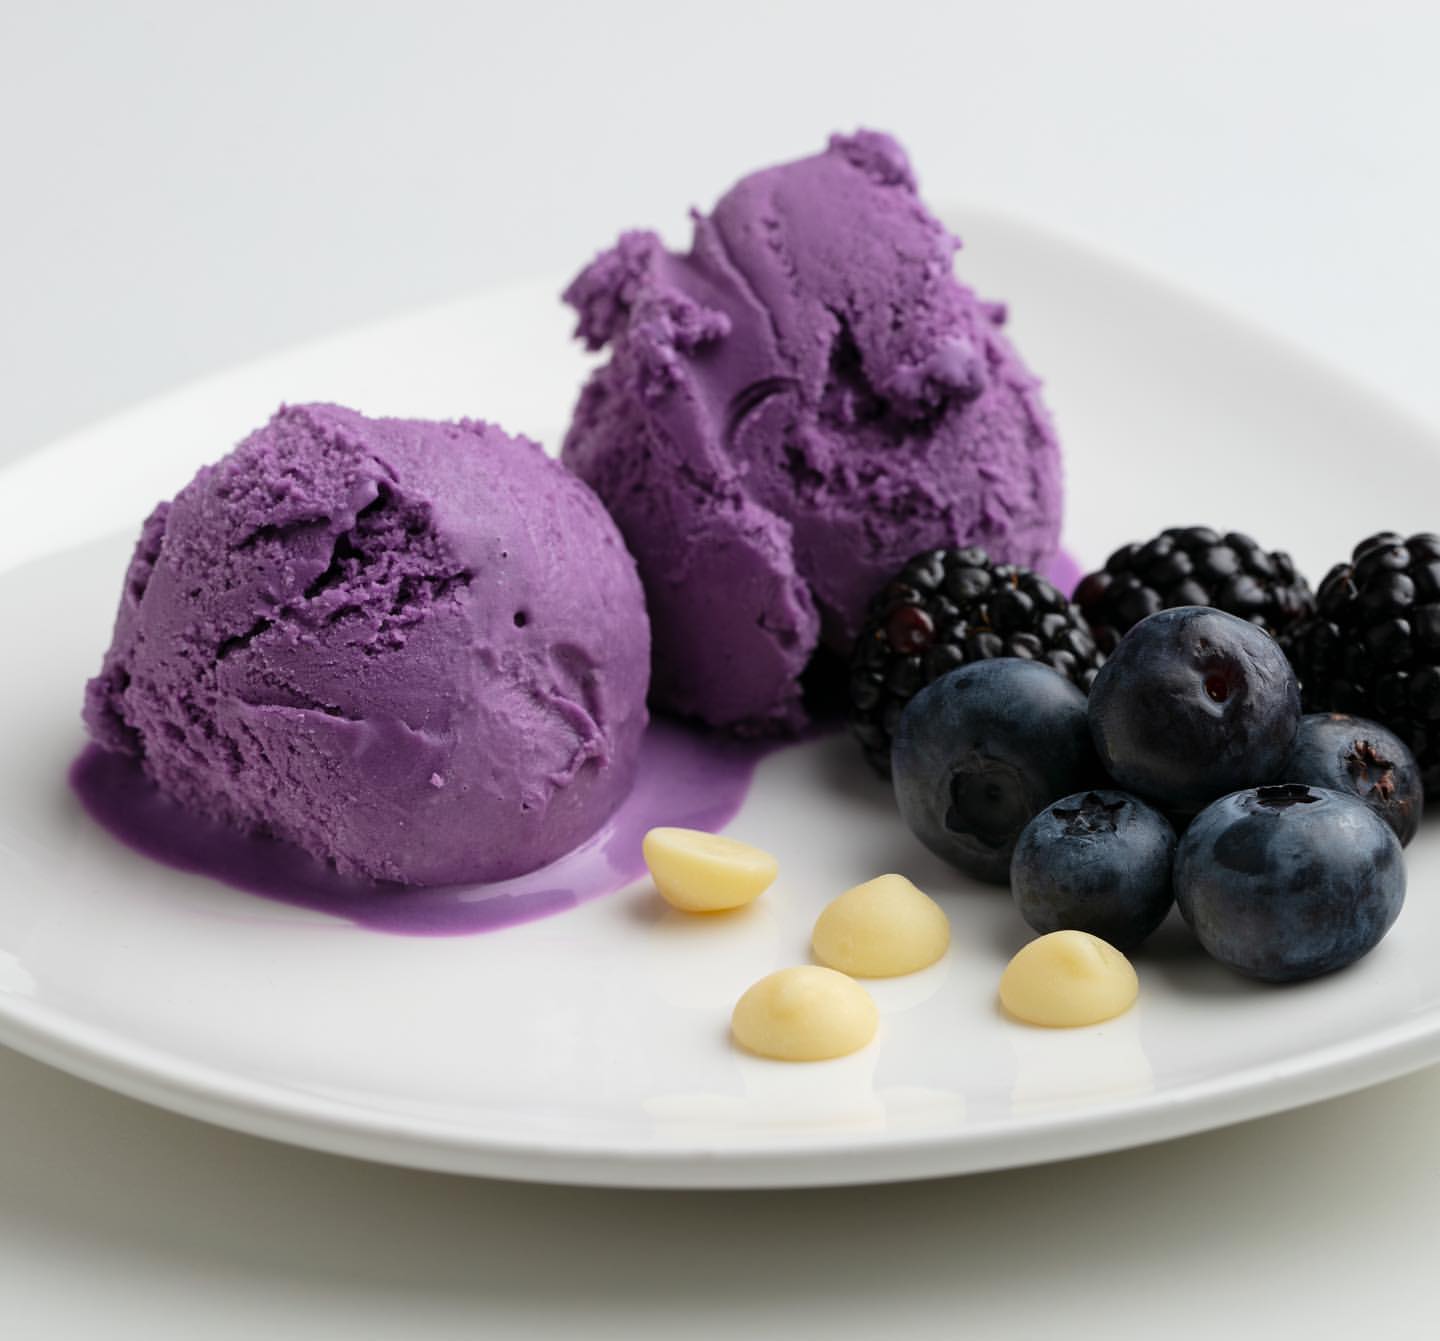 Ube Ice Cream with blackberries, blueberries, and white chocolate